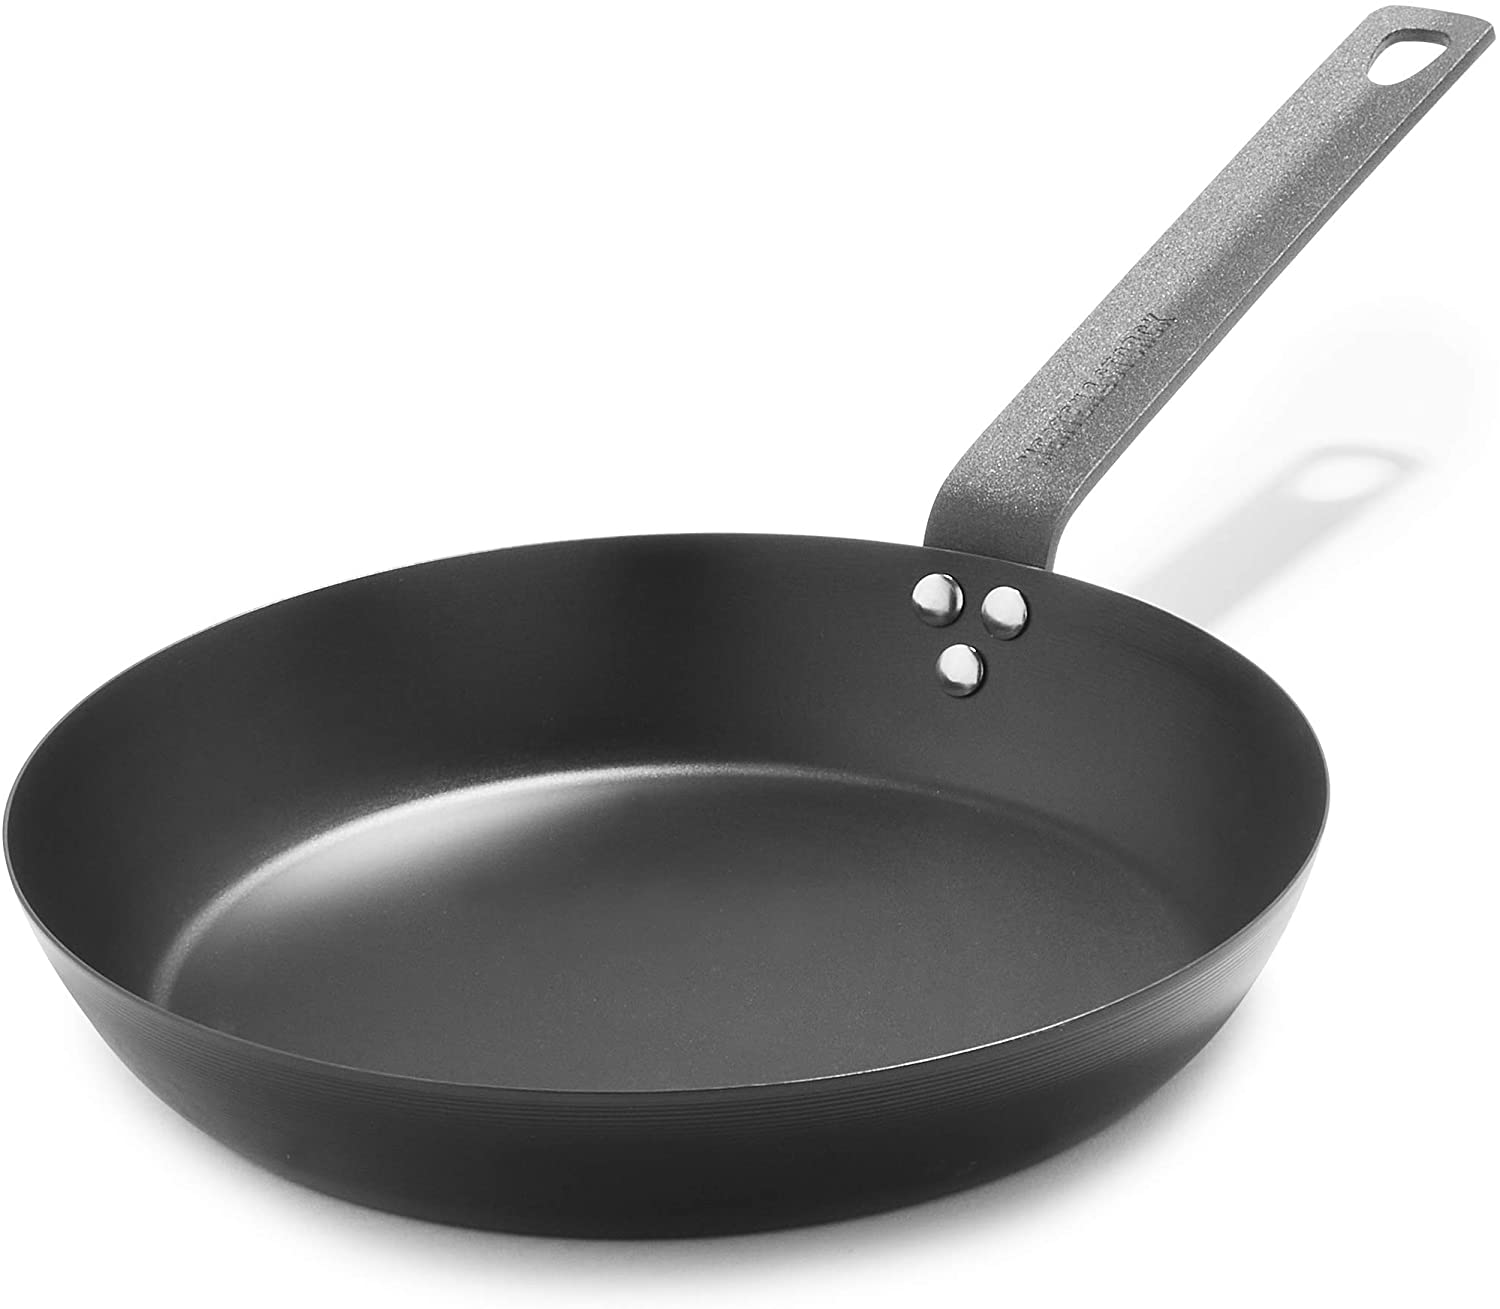 Merten & Storck Black Steel Frying Pan